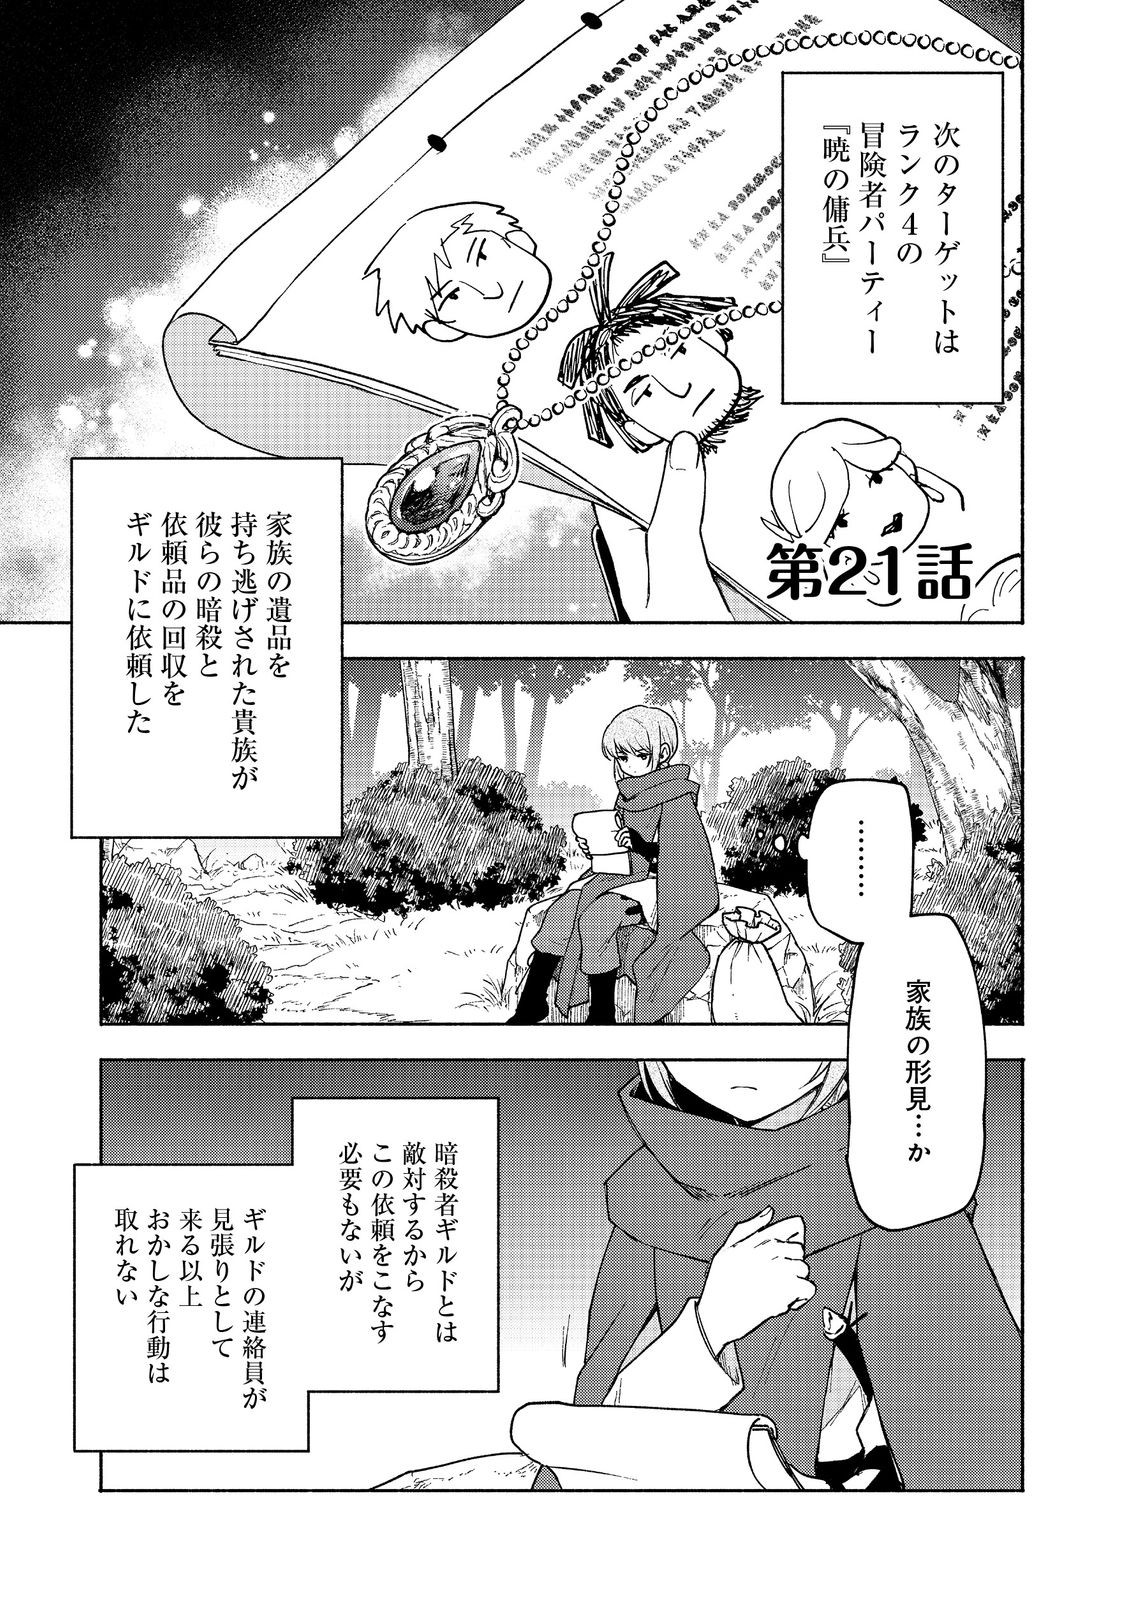 Otome Game no Heroine de Saikyou Survival - Chapter 21 - Page 1